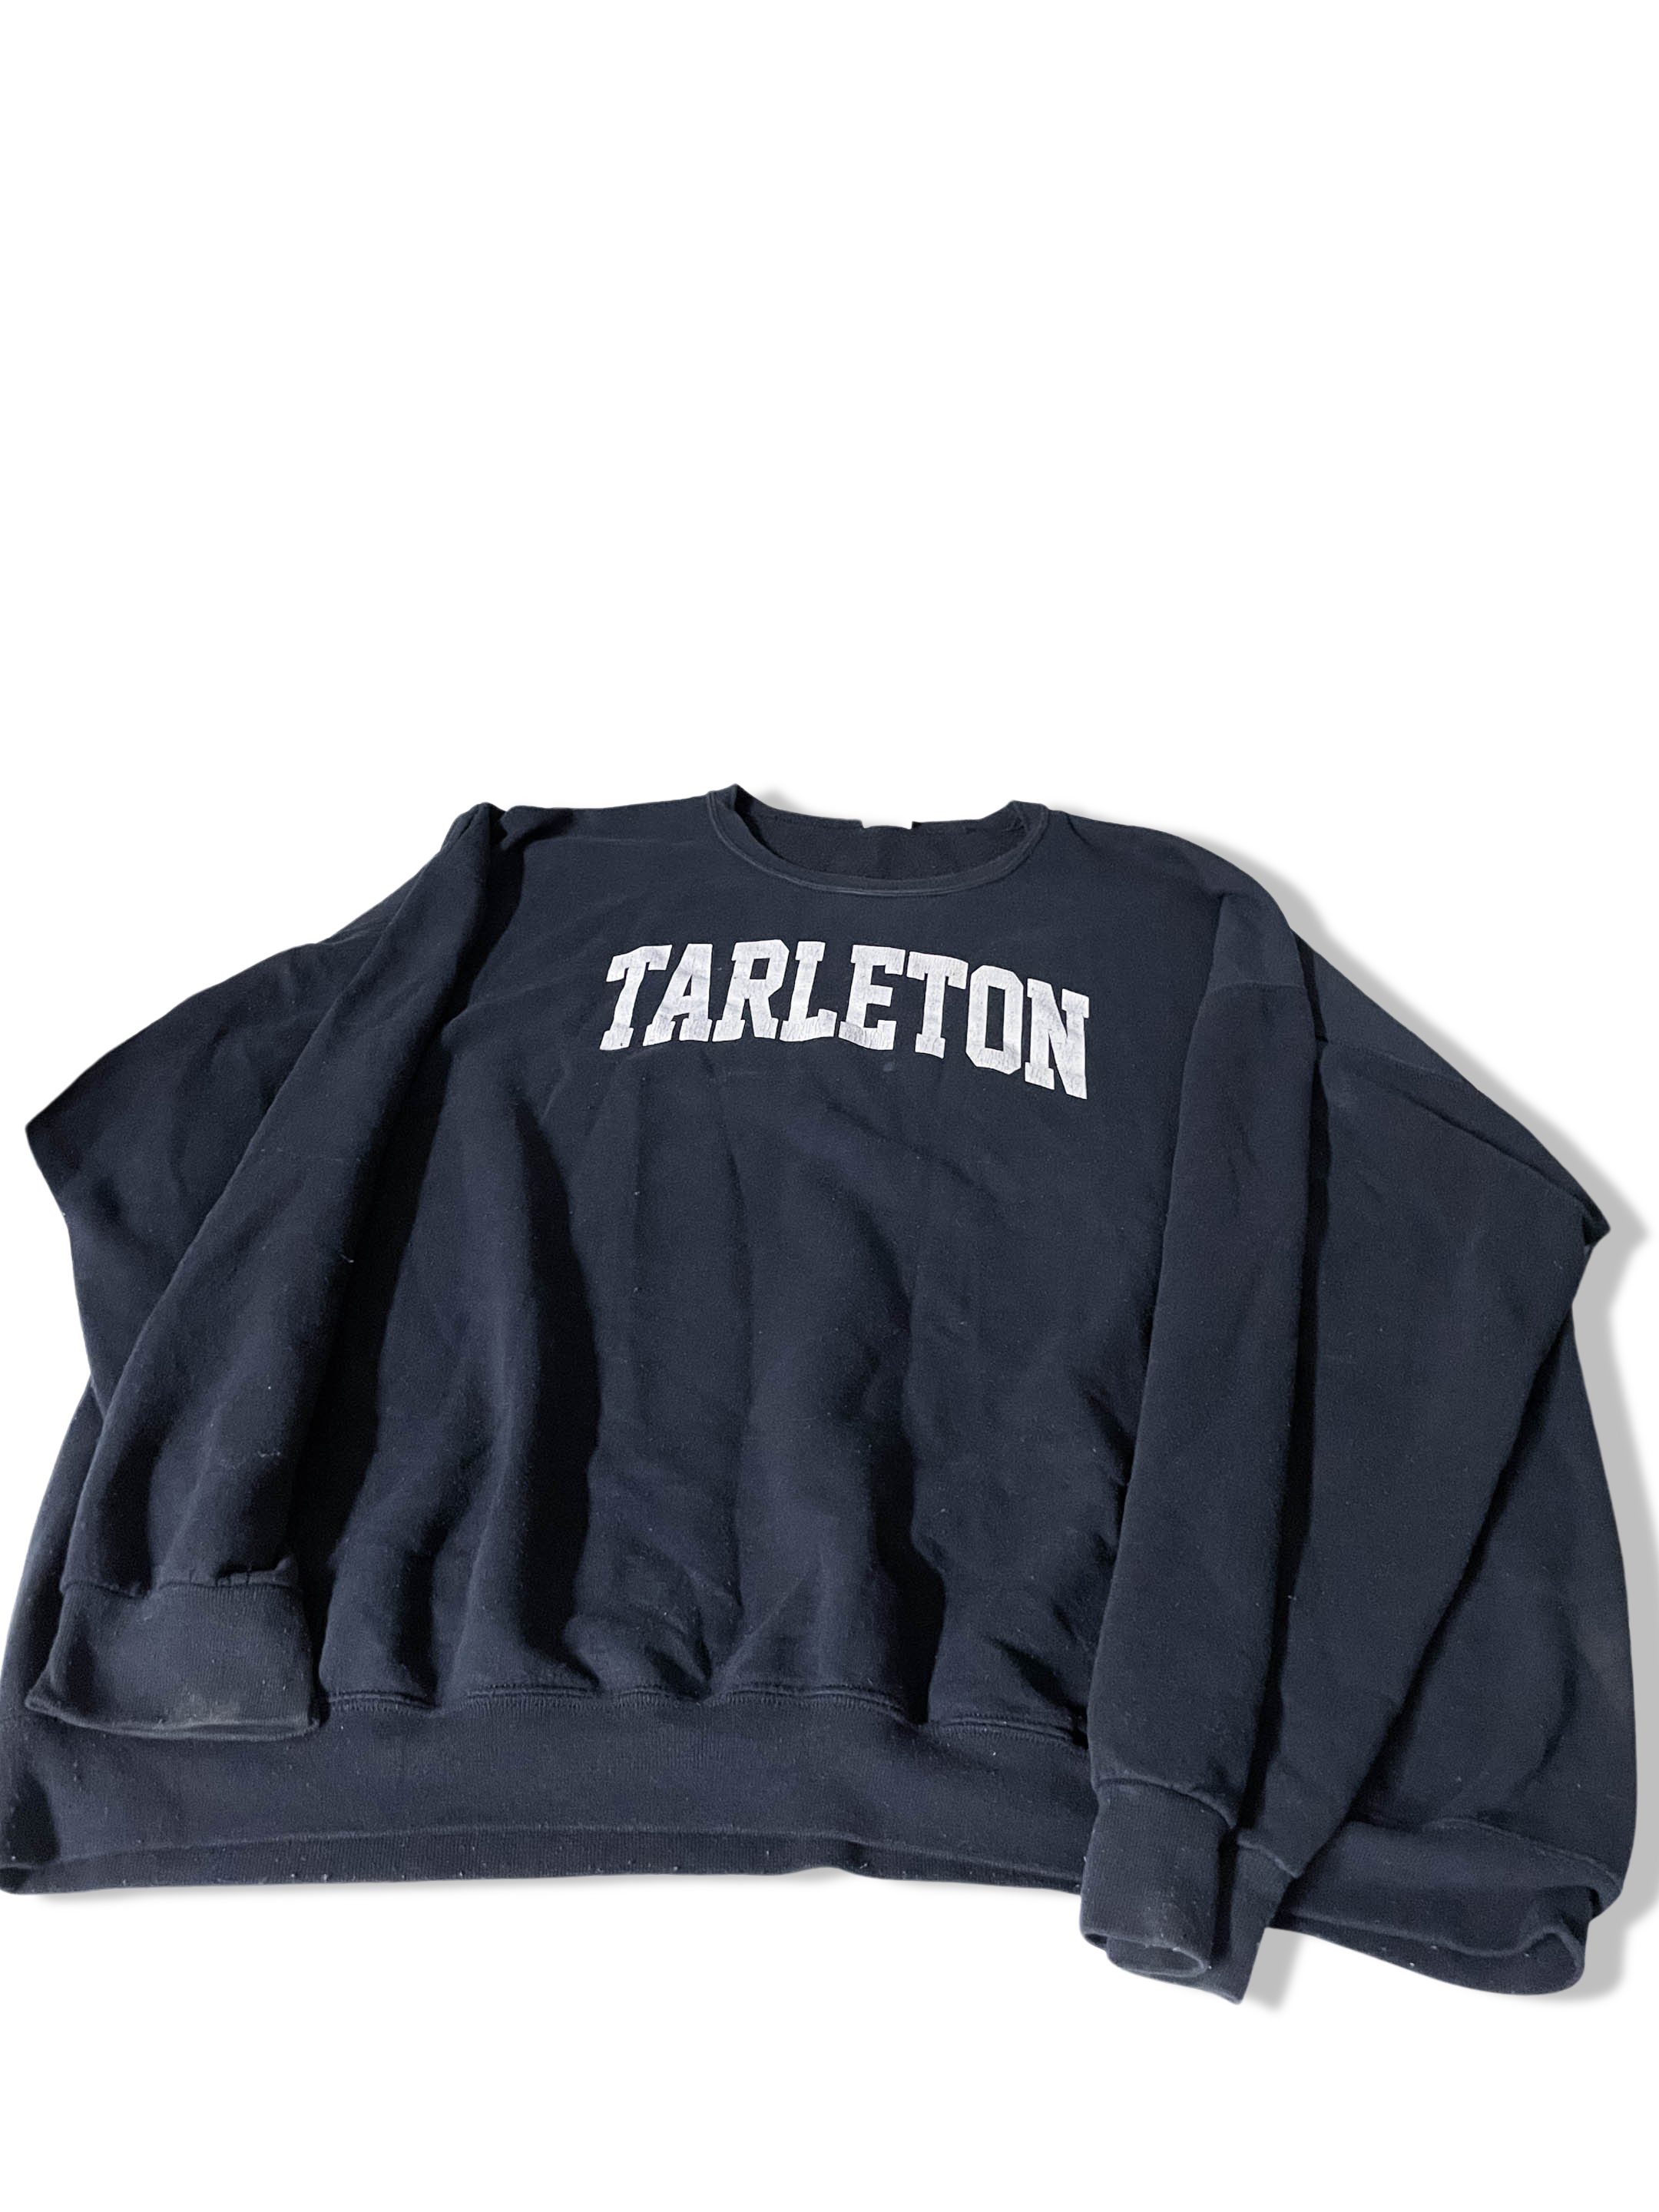 Vintage Jerzees Tarlethon print mens black crew neck solid sweatshirt size XXXL